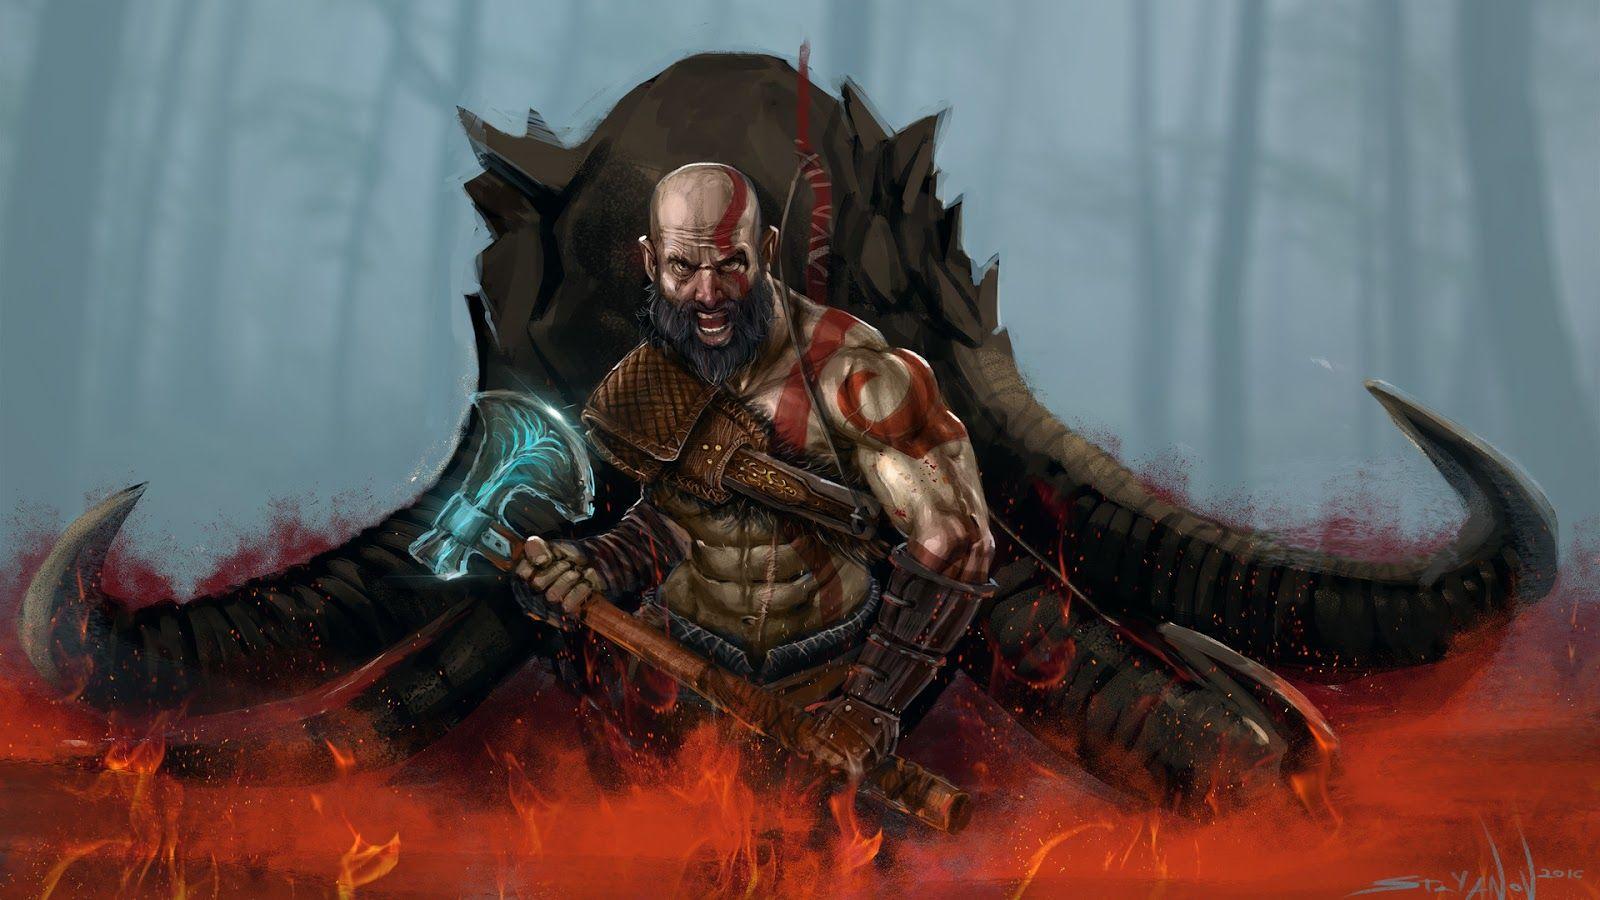 God of War IV HD Wallpaper. Read games reviews, play online games